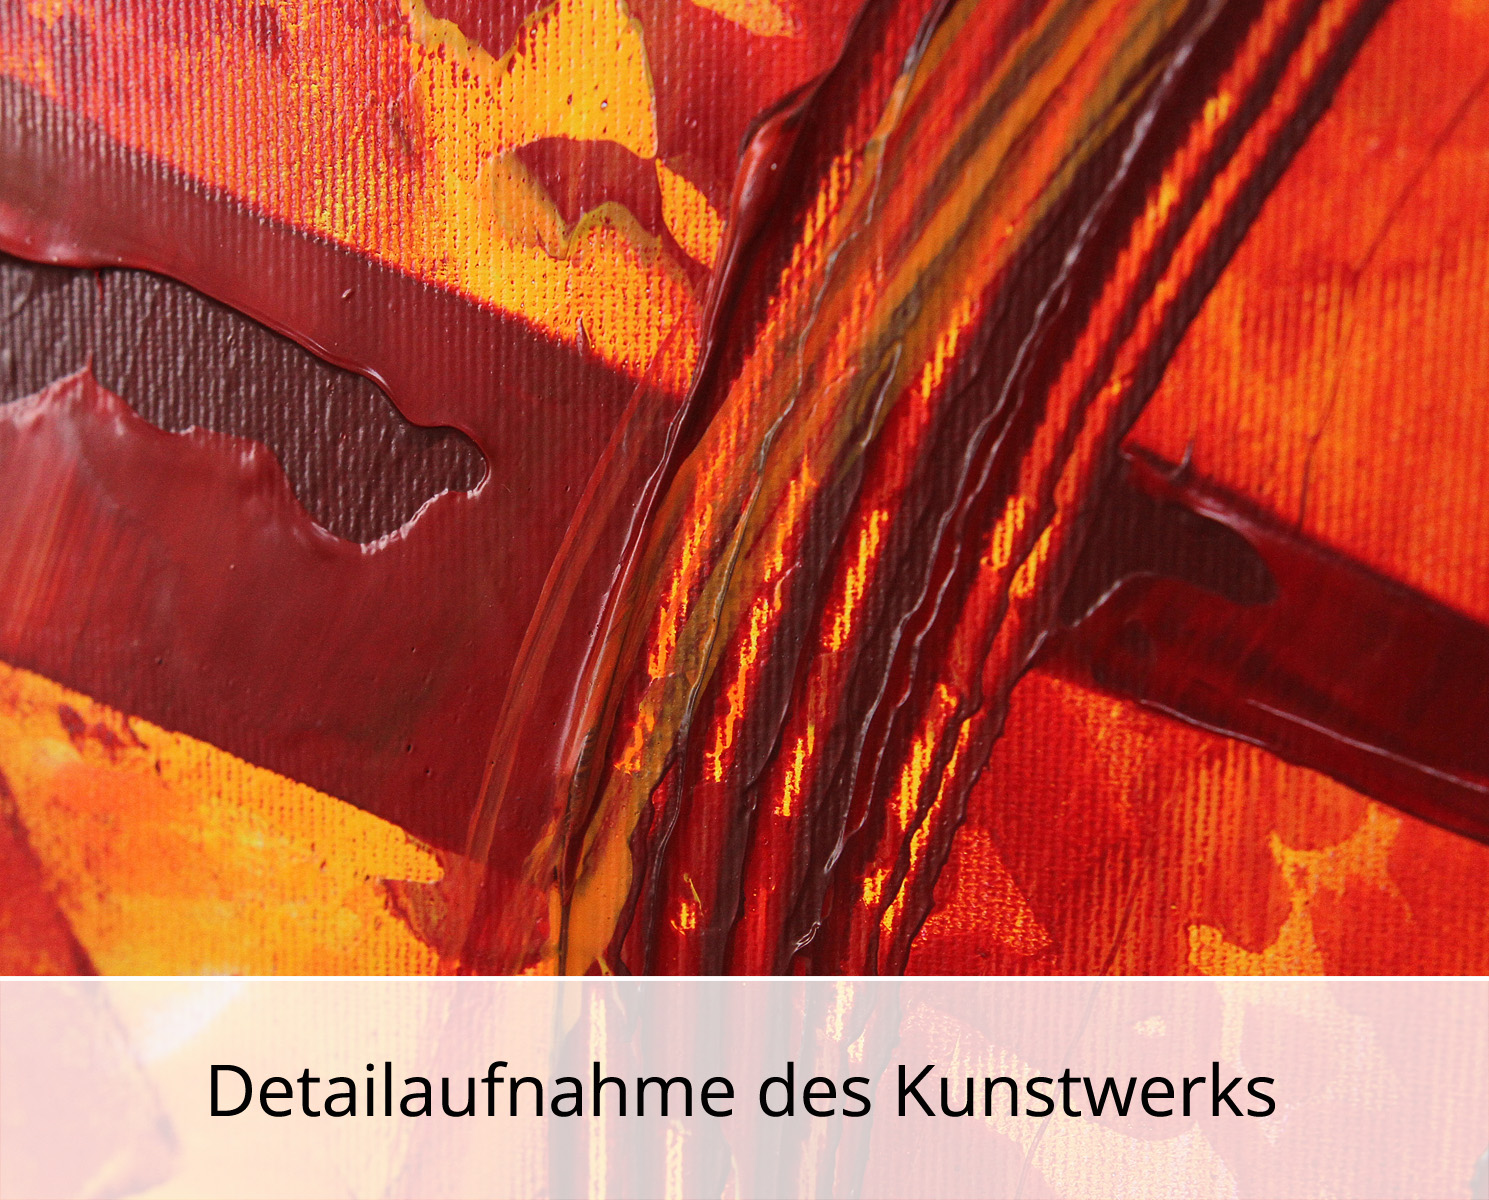 R. König: "Liquid Red VIII", mehrteilige Acrylbilder, Originalgemälde/ Unikat